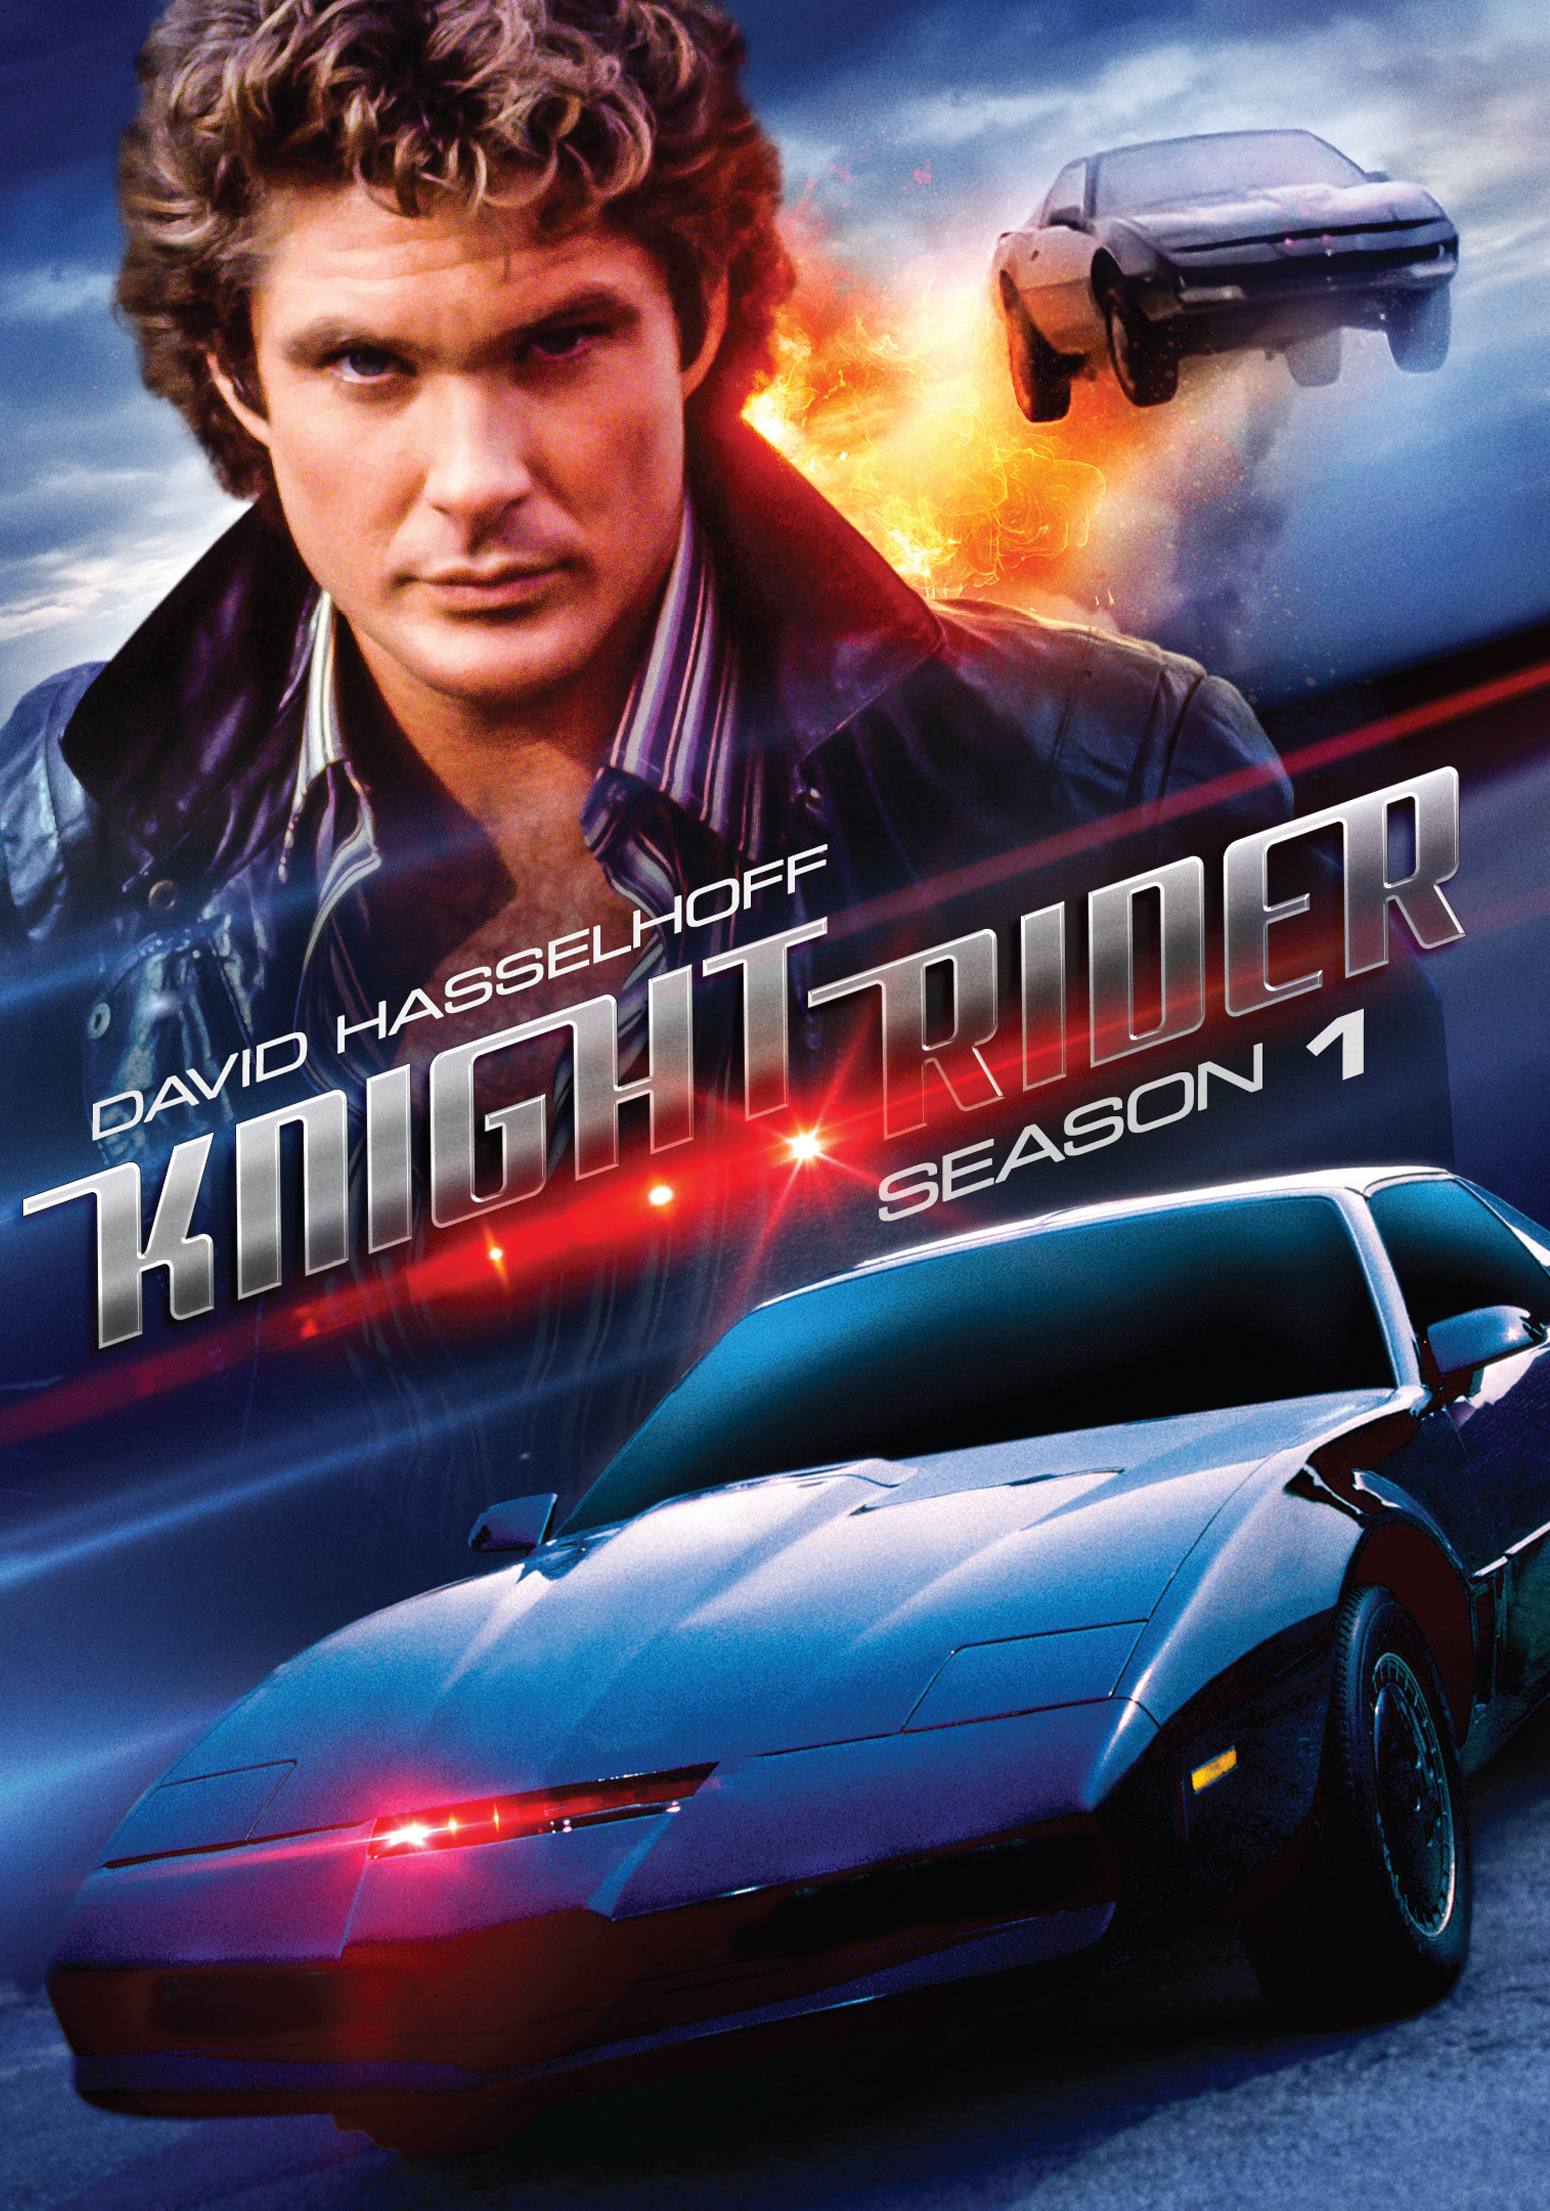 Best Buy Knight Rider Season One [4 Discs] [DVD]